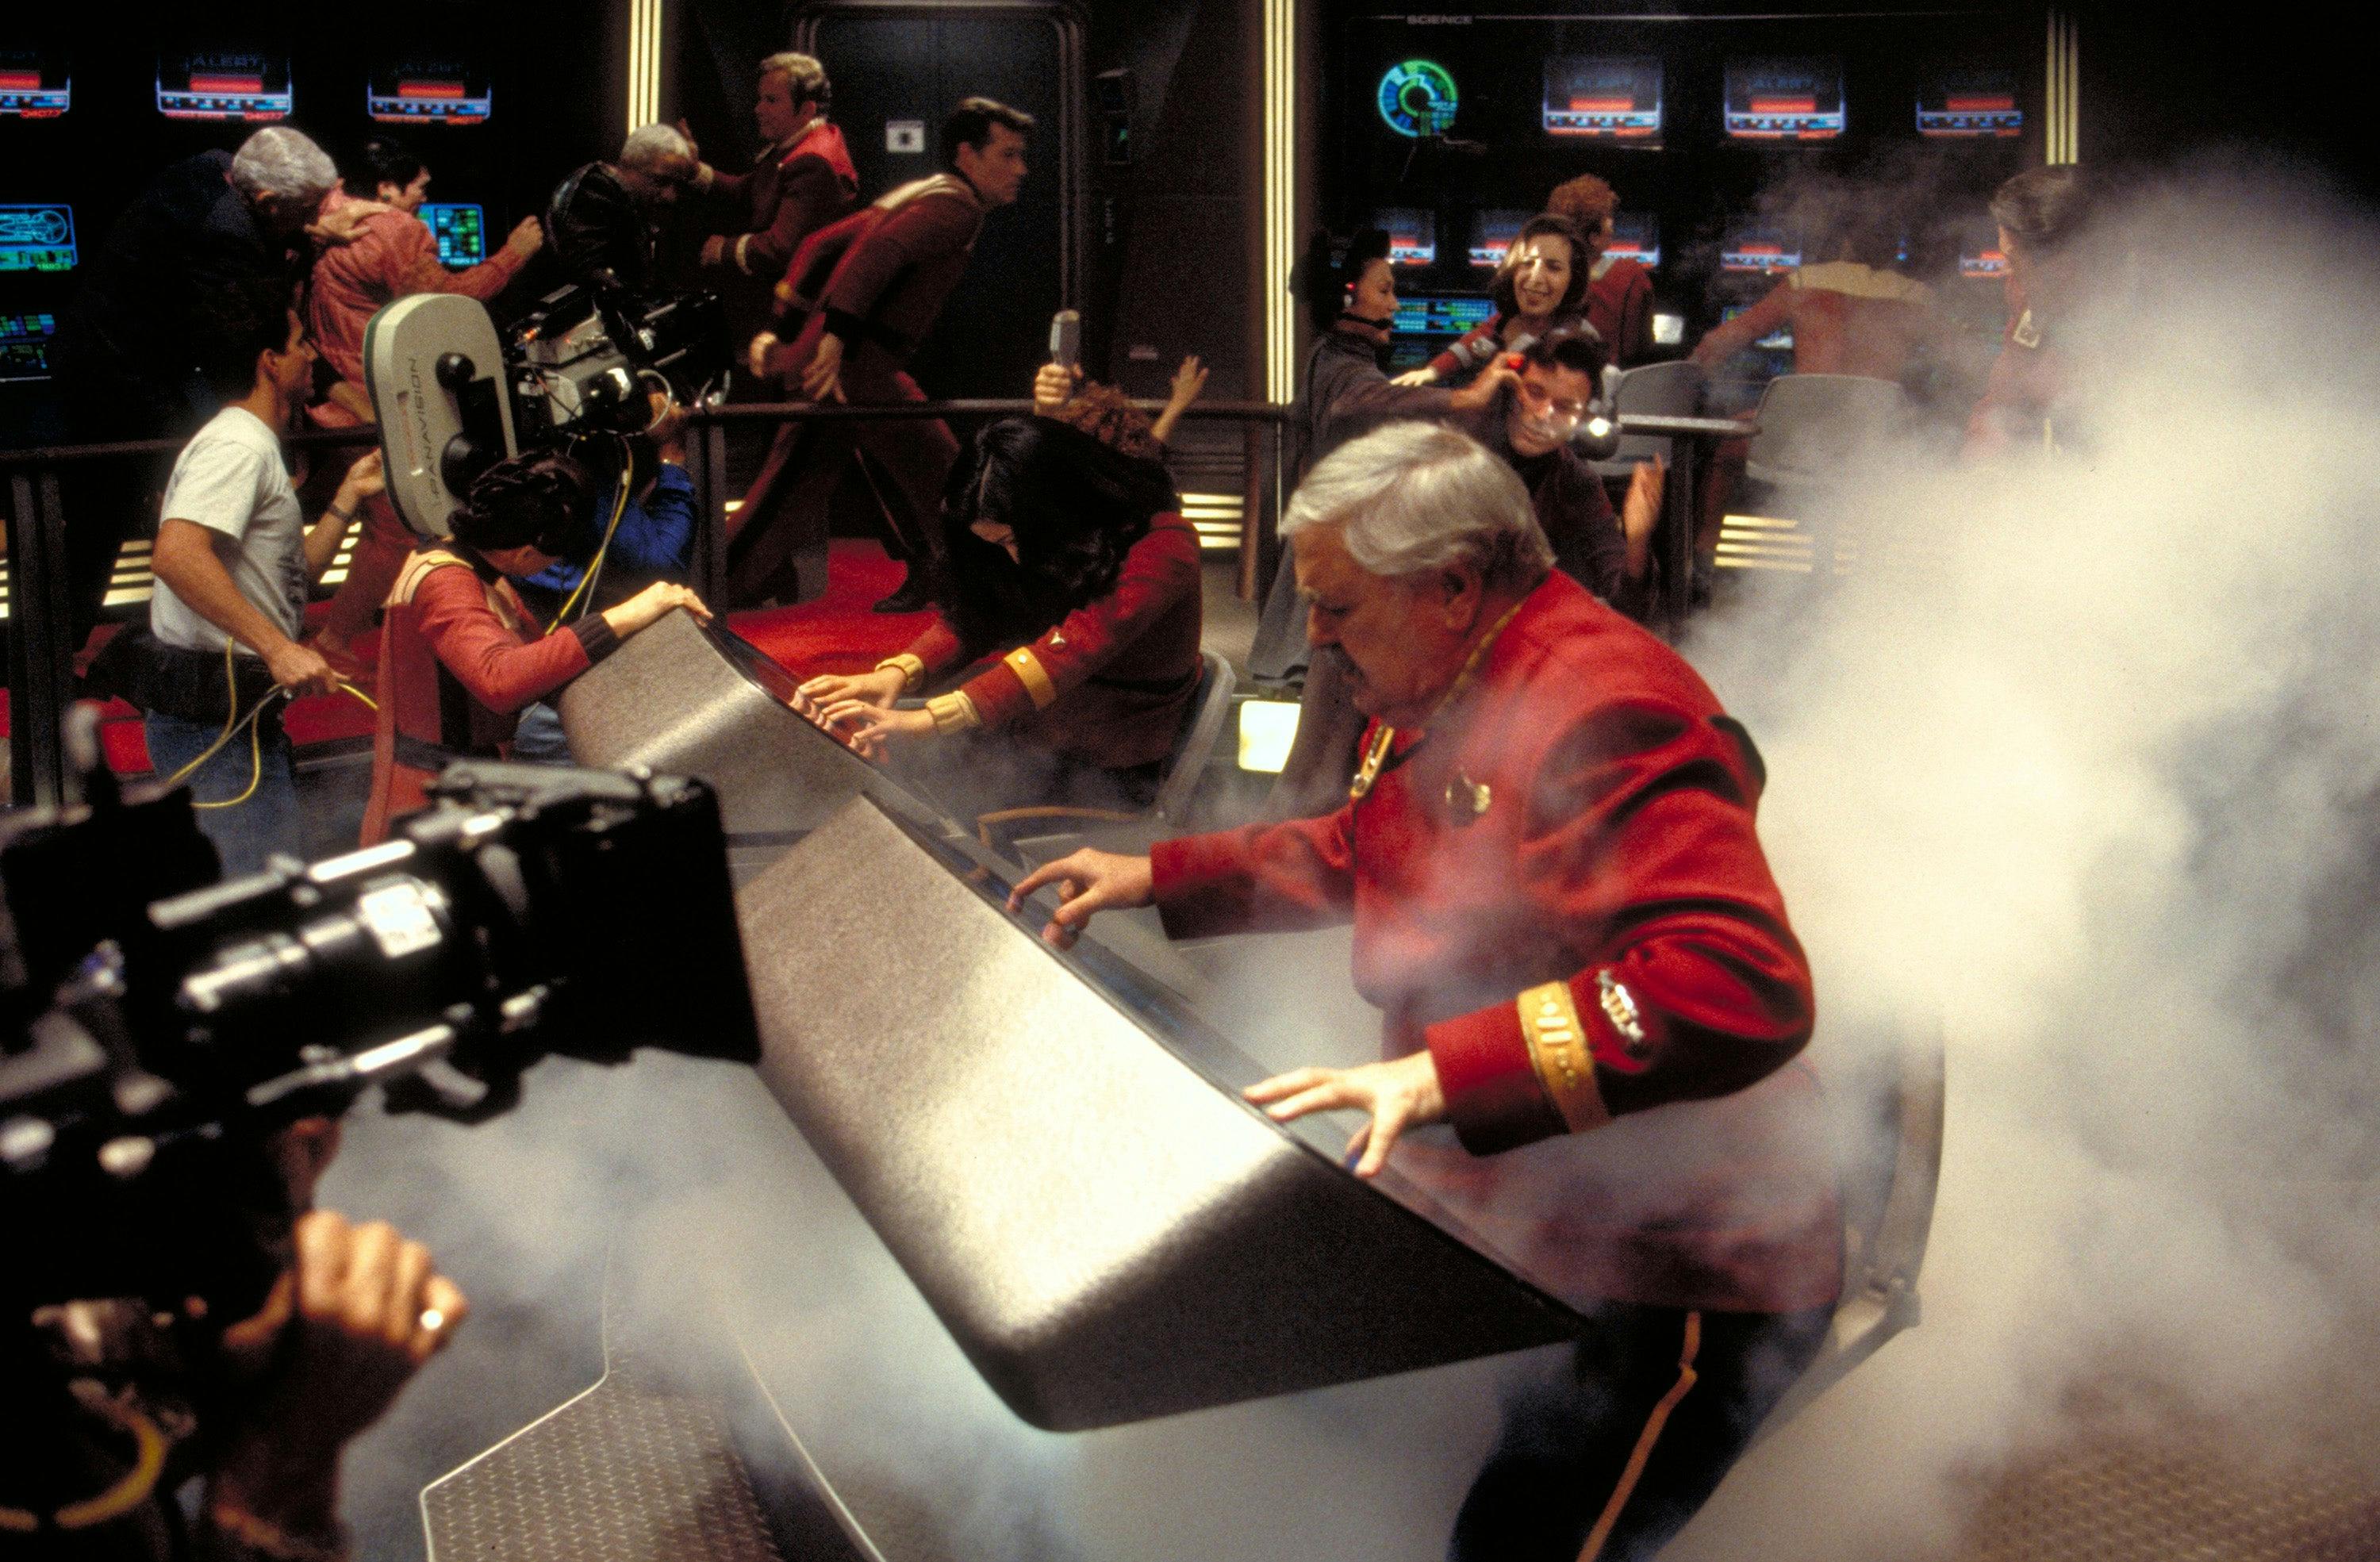 James Doohan at the controls as smoke arises around him on set of Star Trek Generations